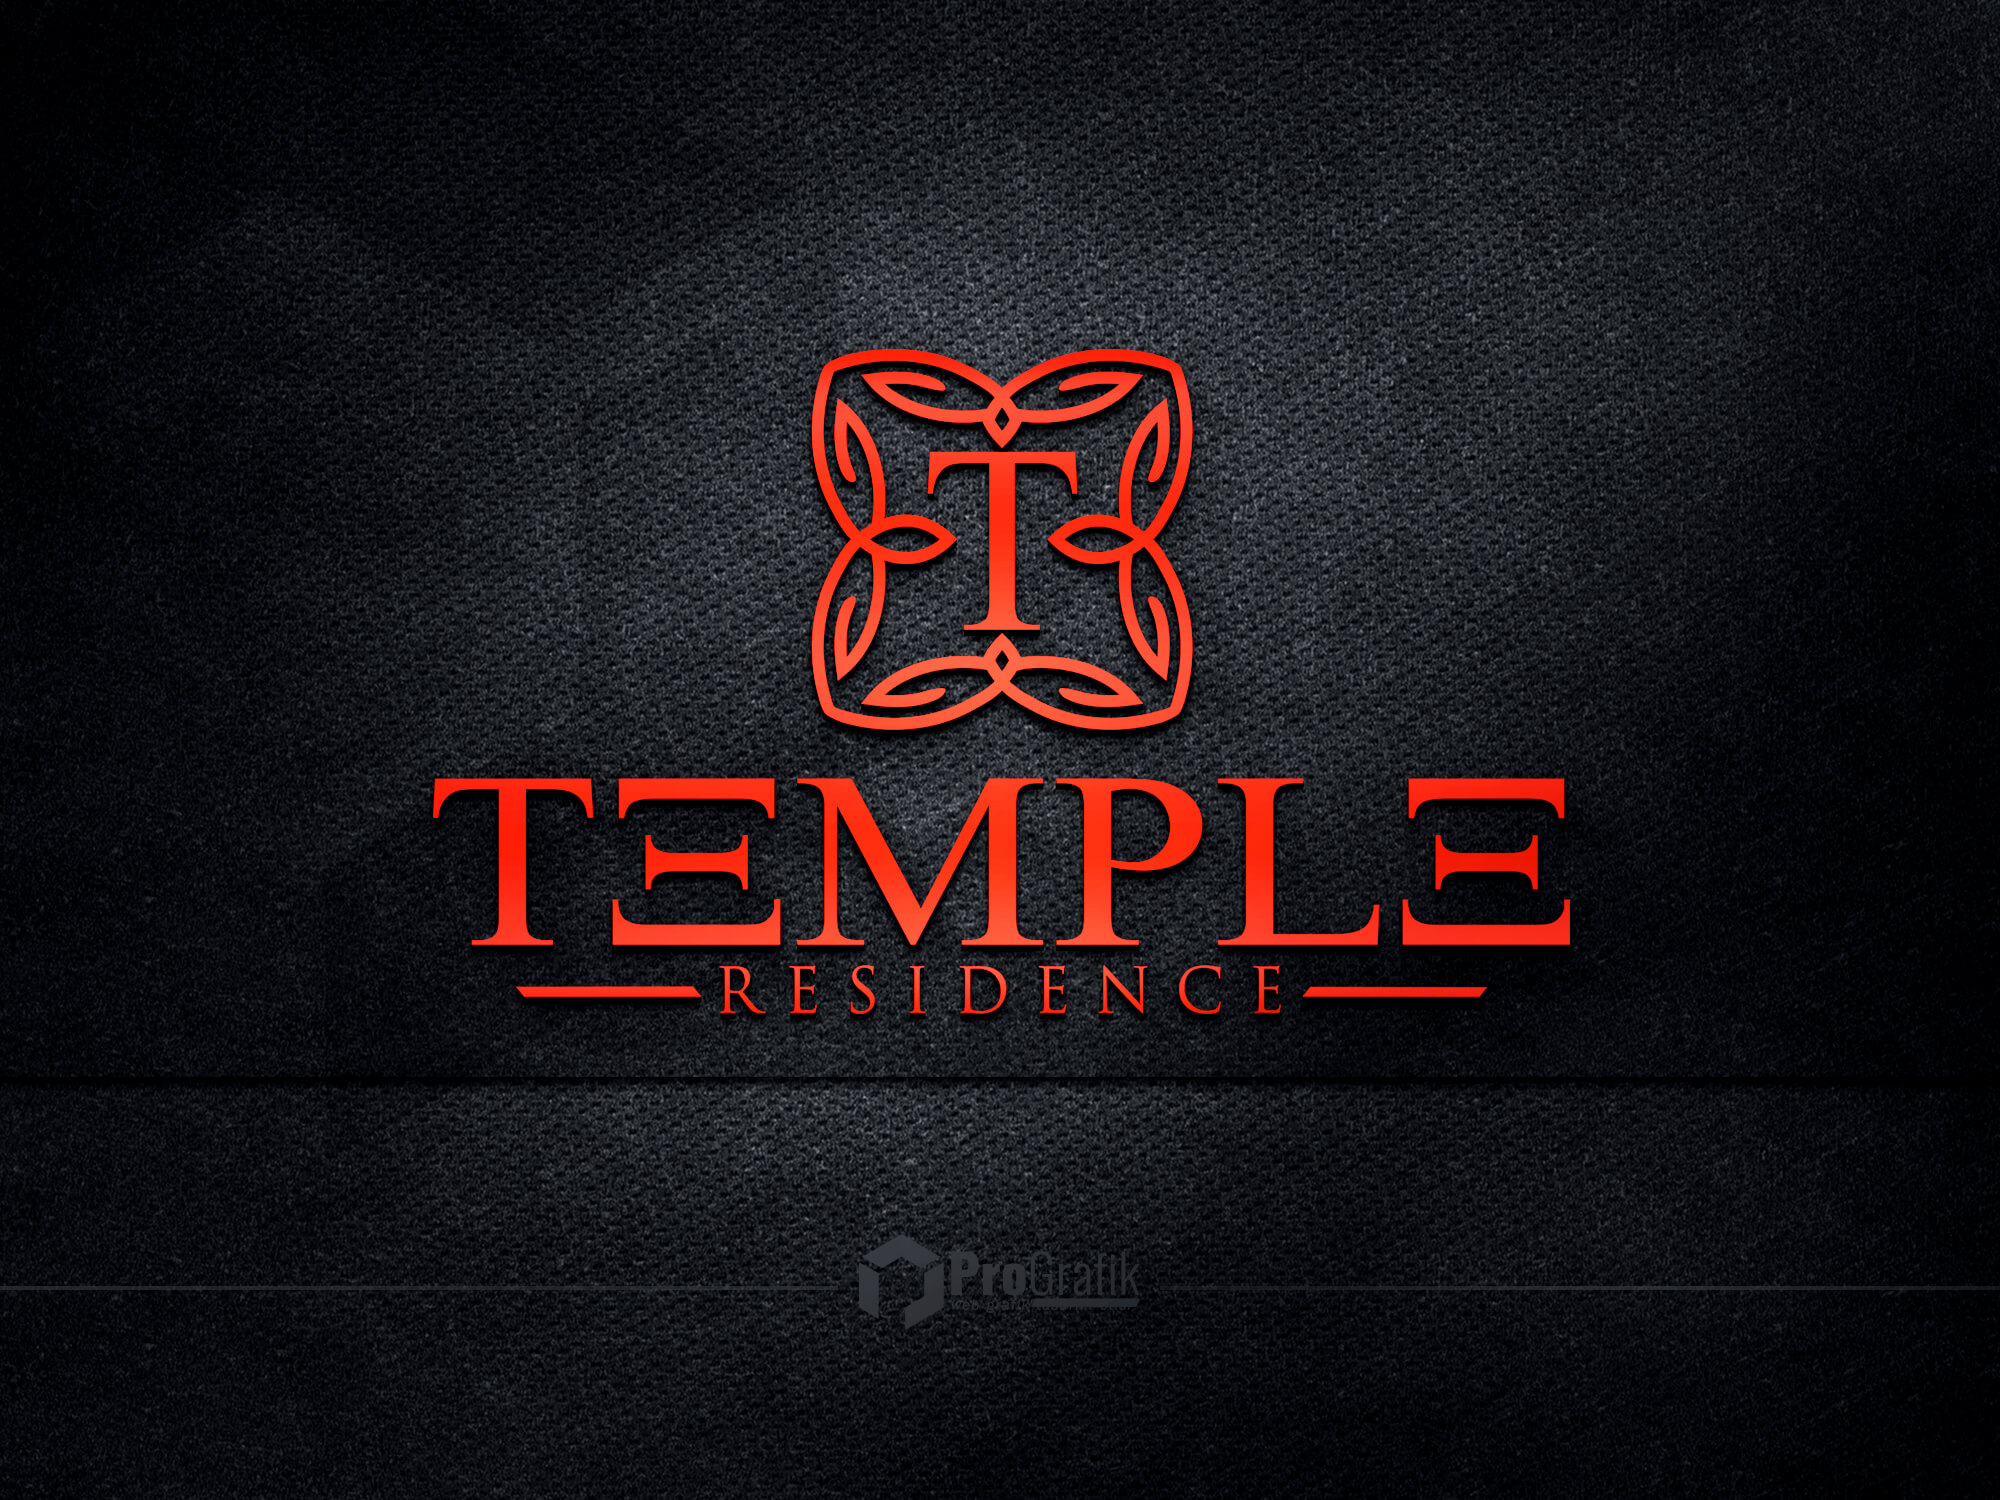 Temple t. Terrace logo.